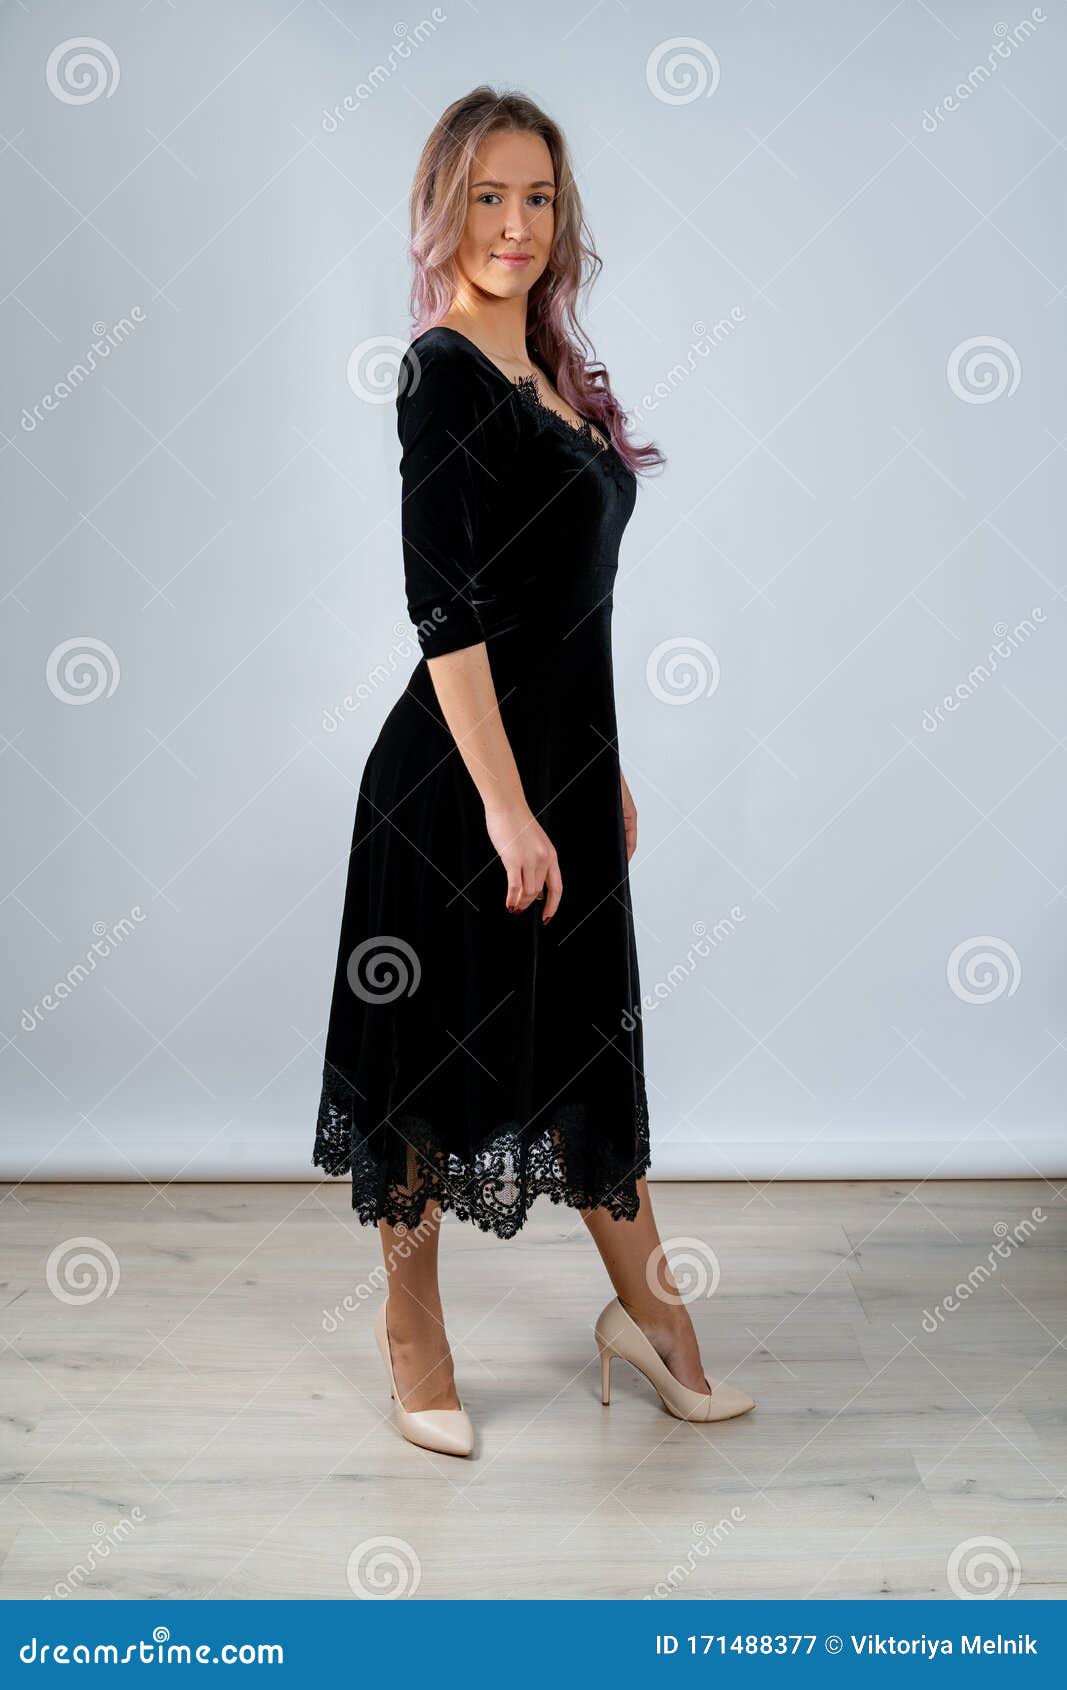 black dress and beige heels